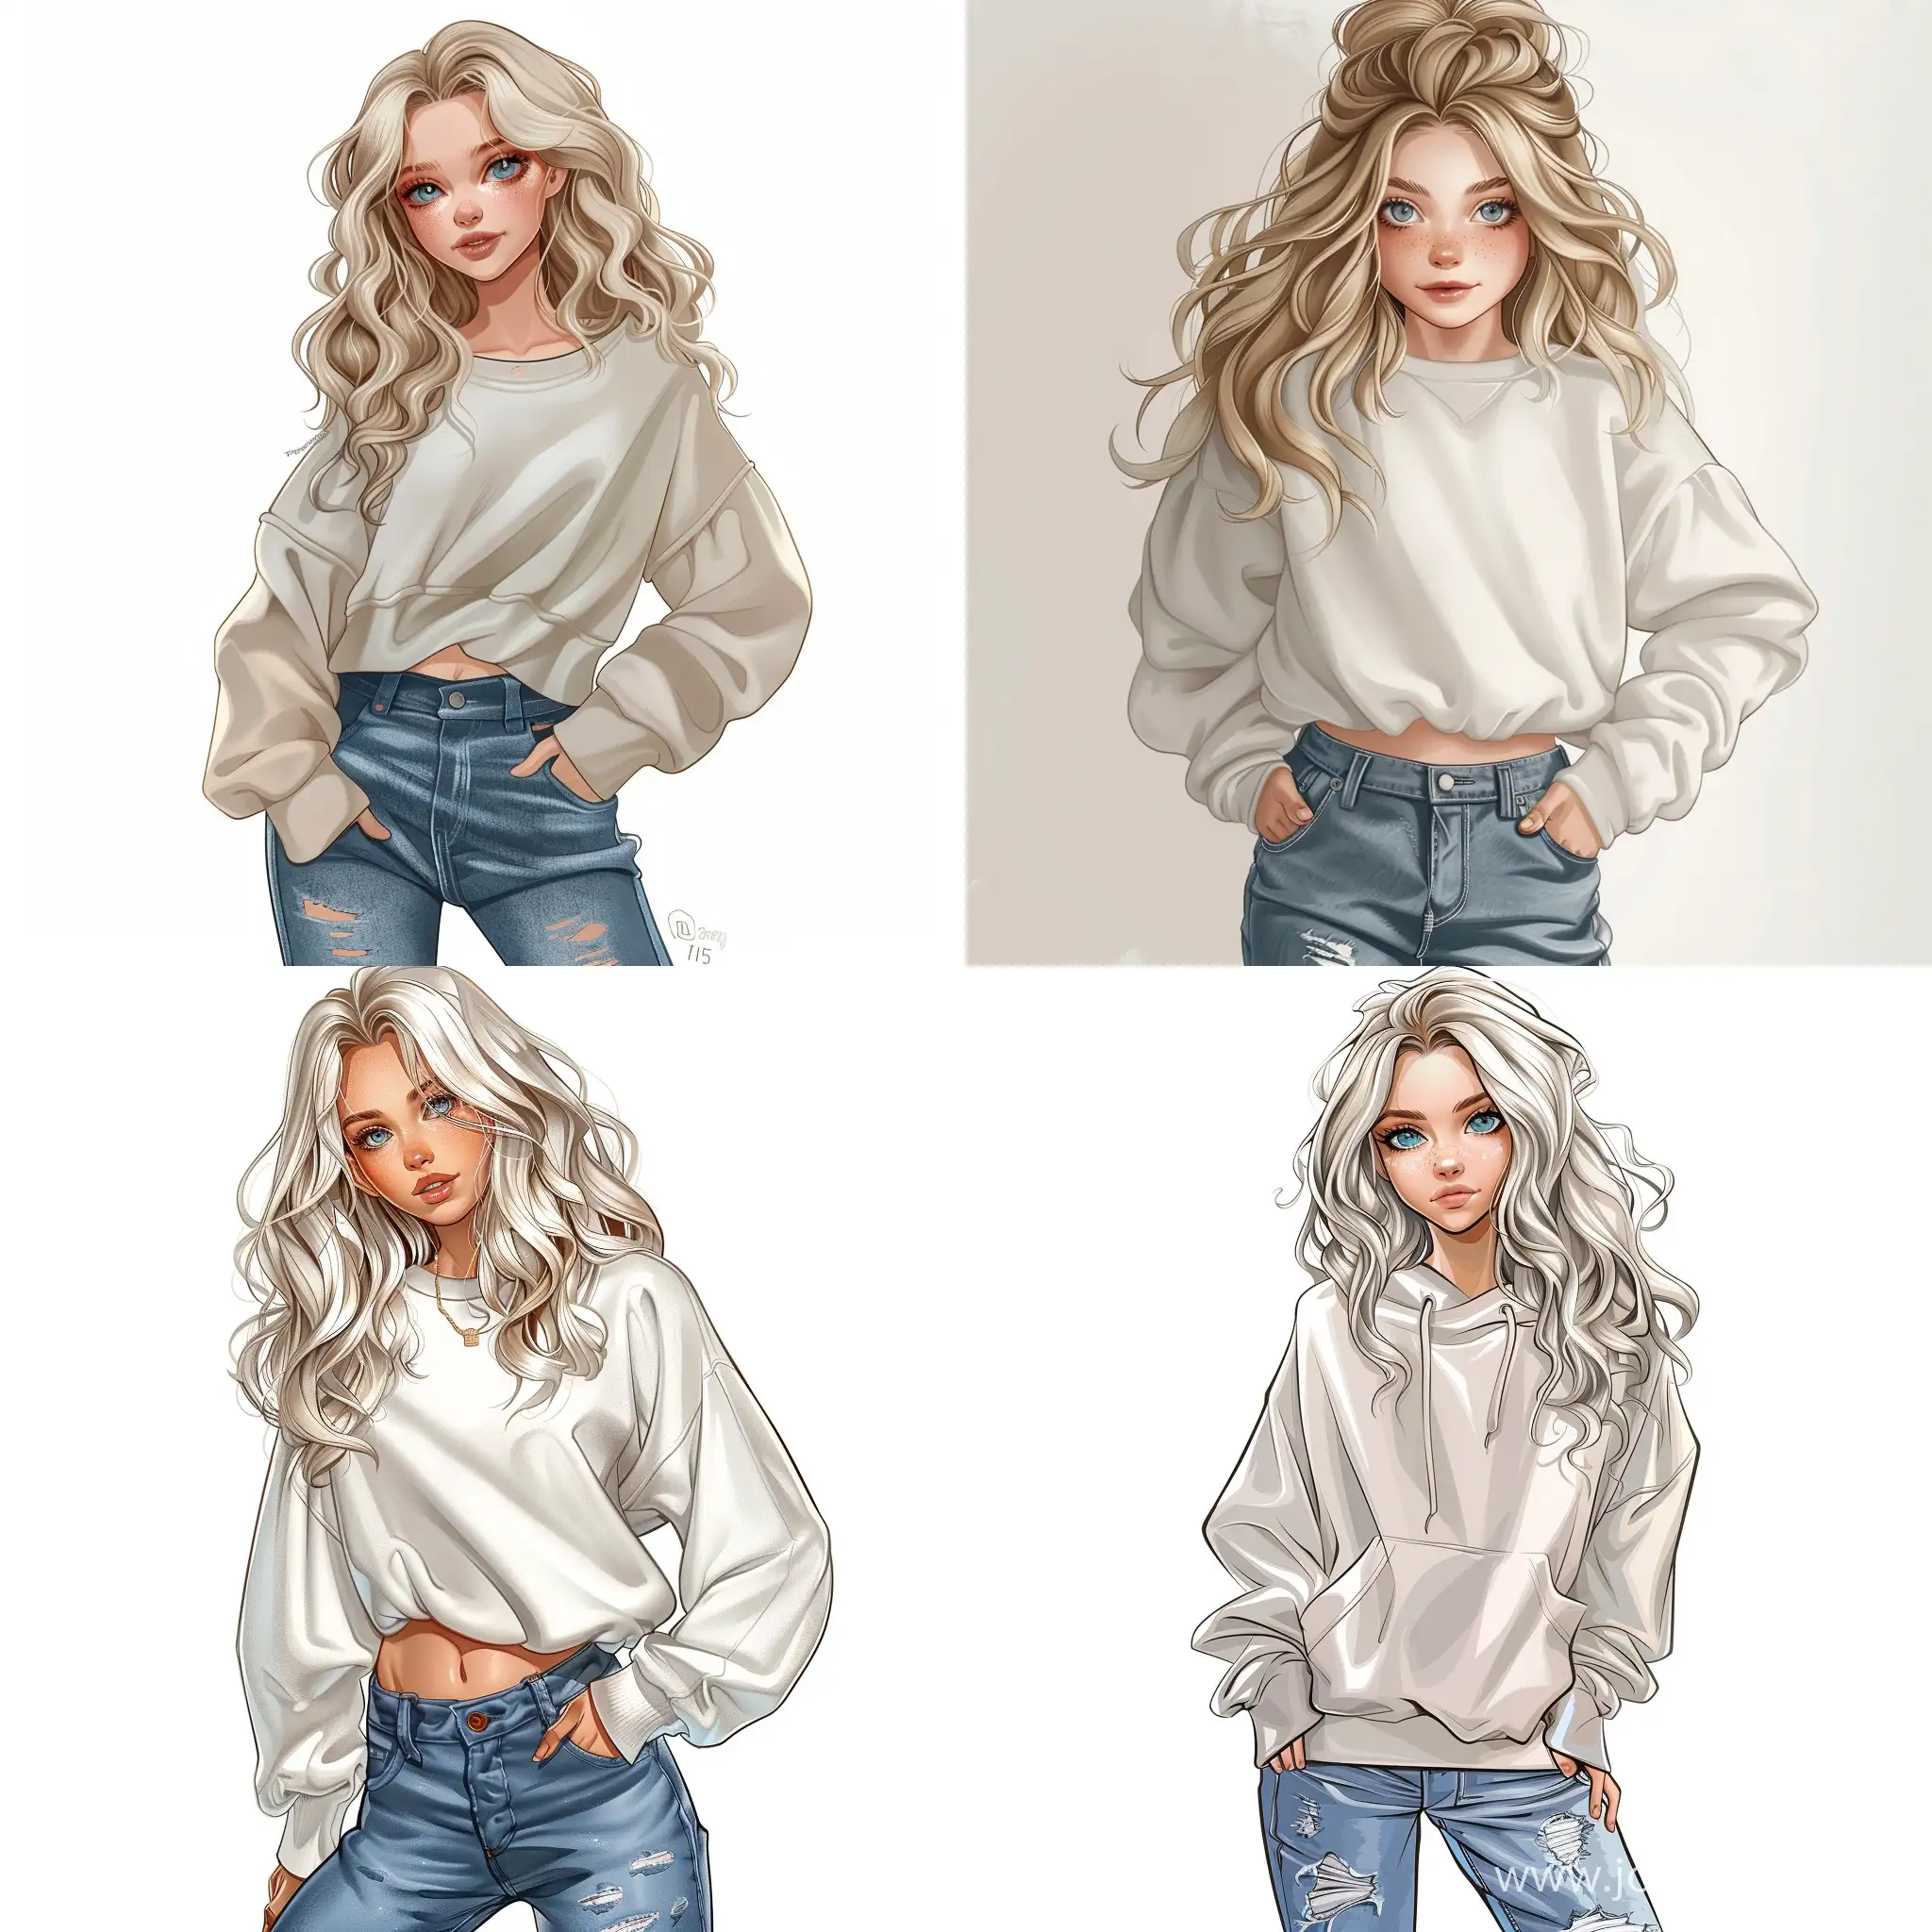 Beautiful girl, wavy blonde hair, gray-blue eyes, white skin, teenager, 15 years old, jeans and oversize sweatshirt, high quality, high detail, cartoon art